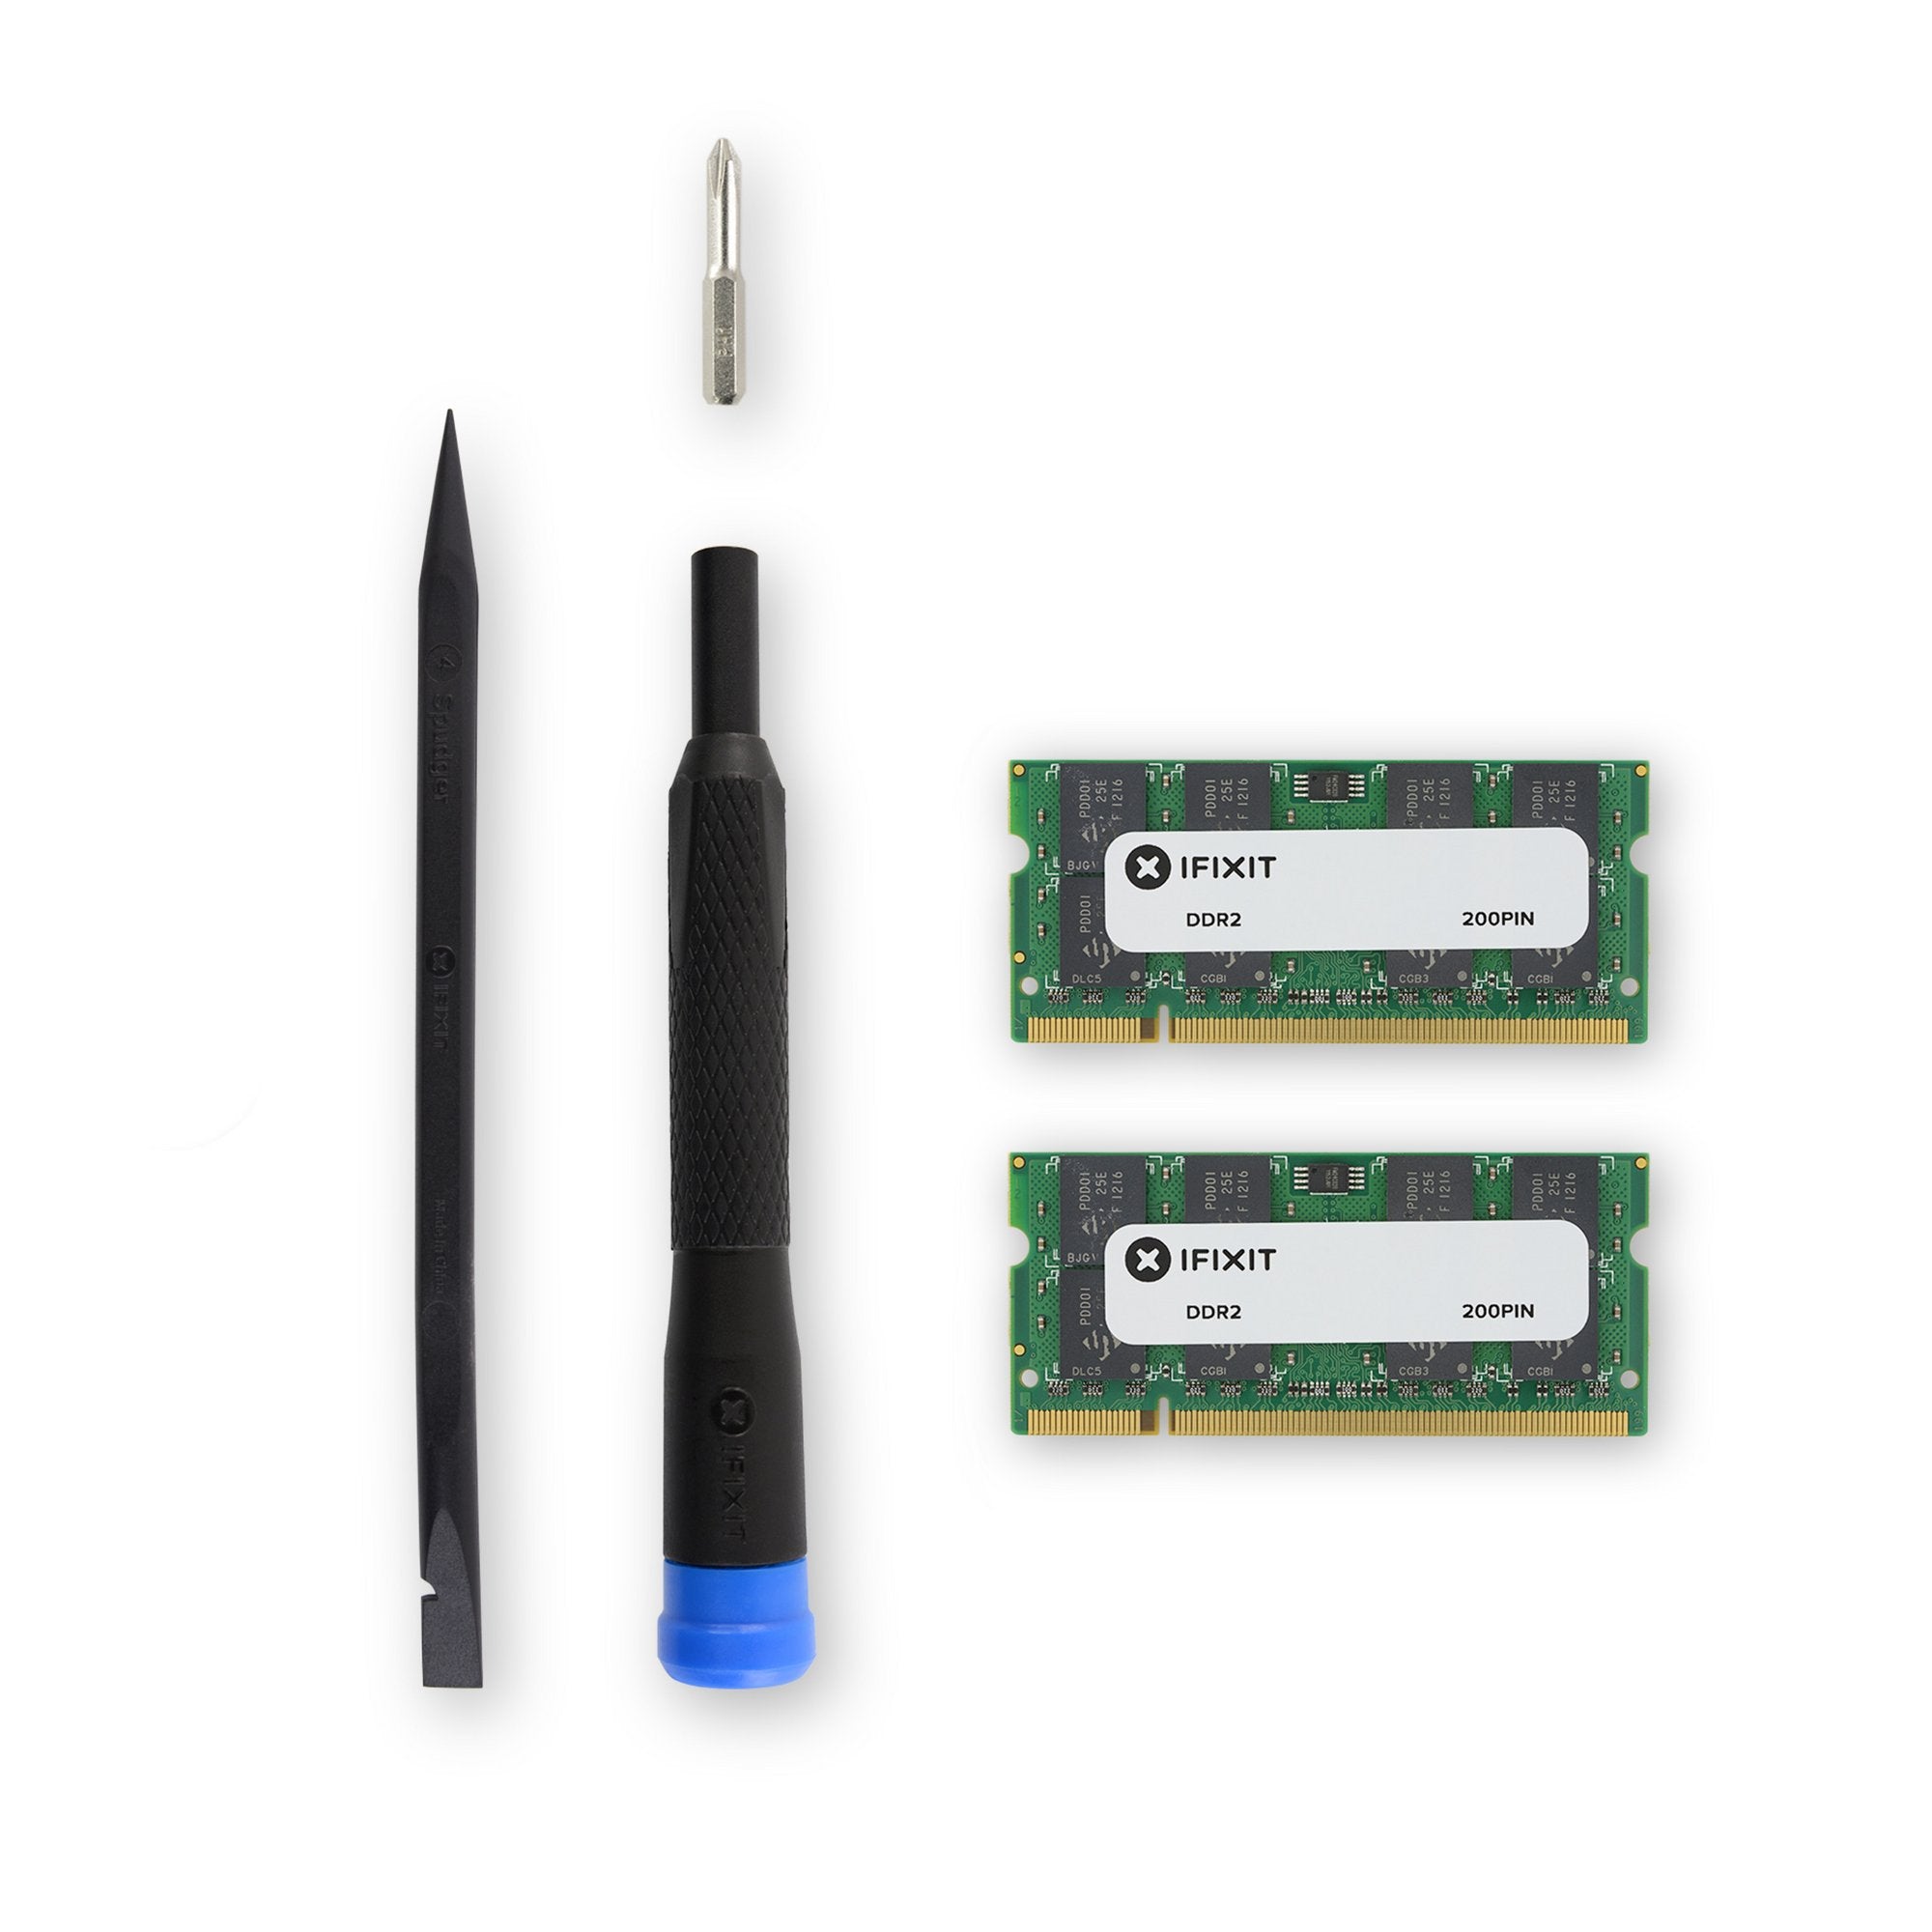 iMac Intel 17" EMC 2124 (Late 2006) Memory Maxxer RAM Upgrade Kit